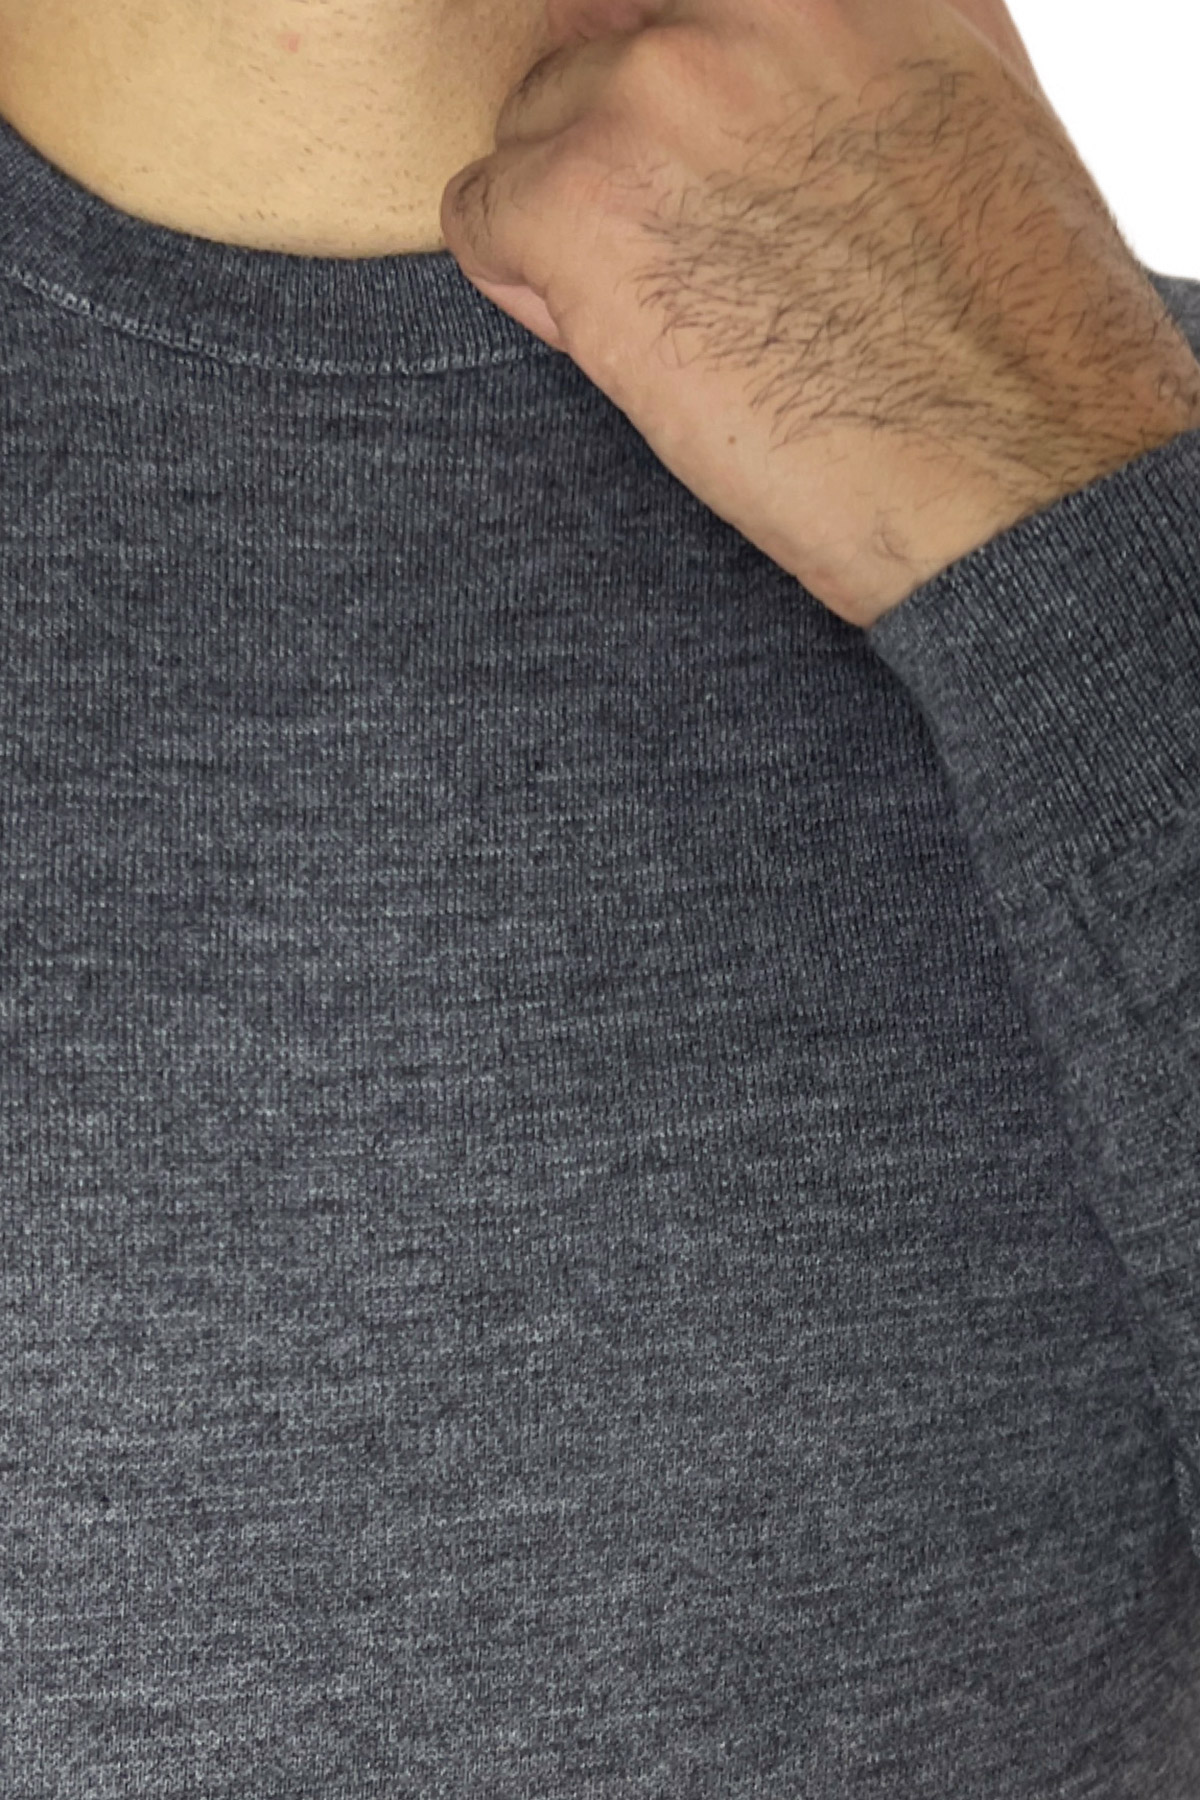 Maglioncino da uomo girocollo grigio medio in lana merinos slim fit made in italy tinta unita